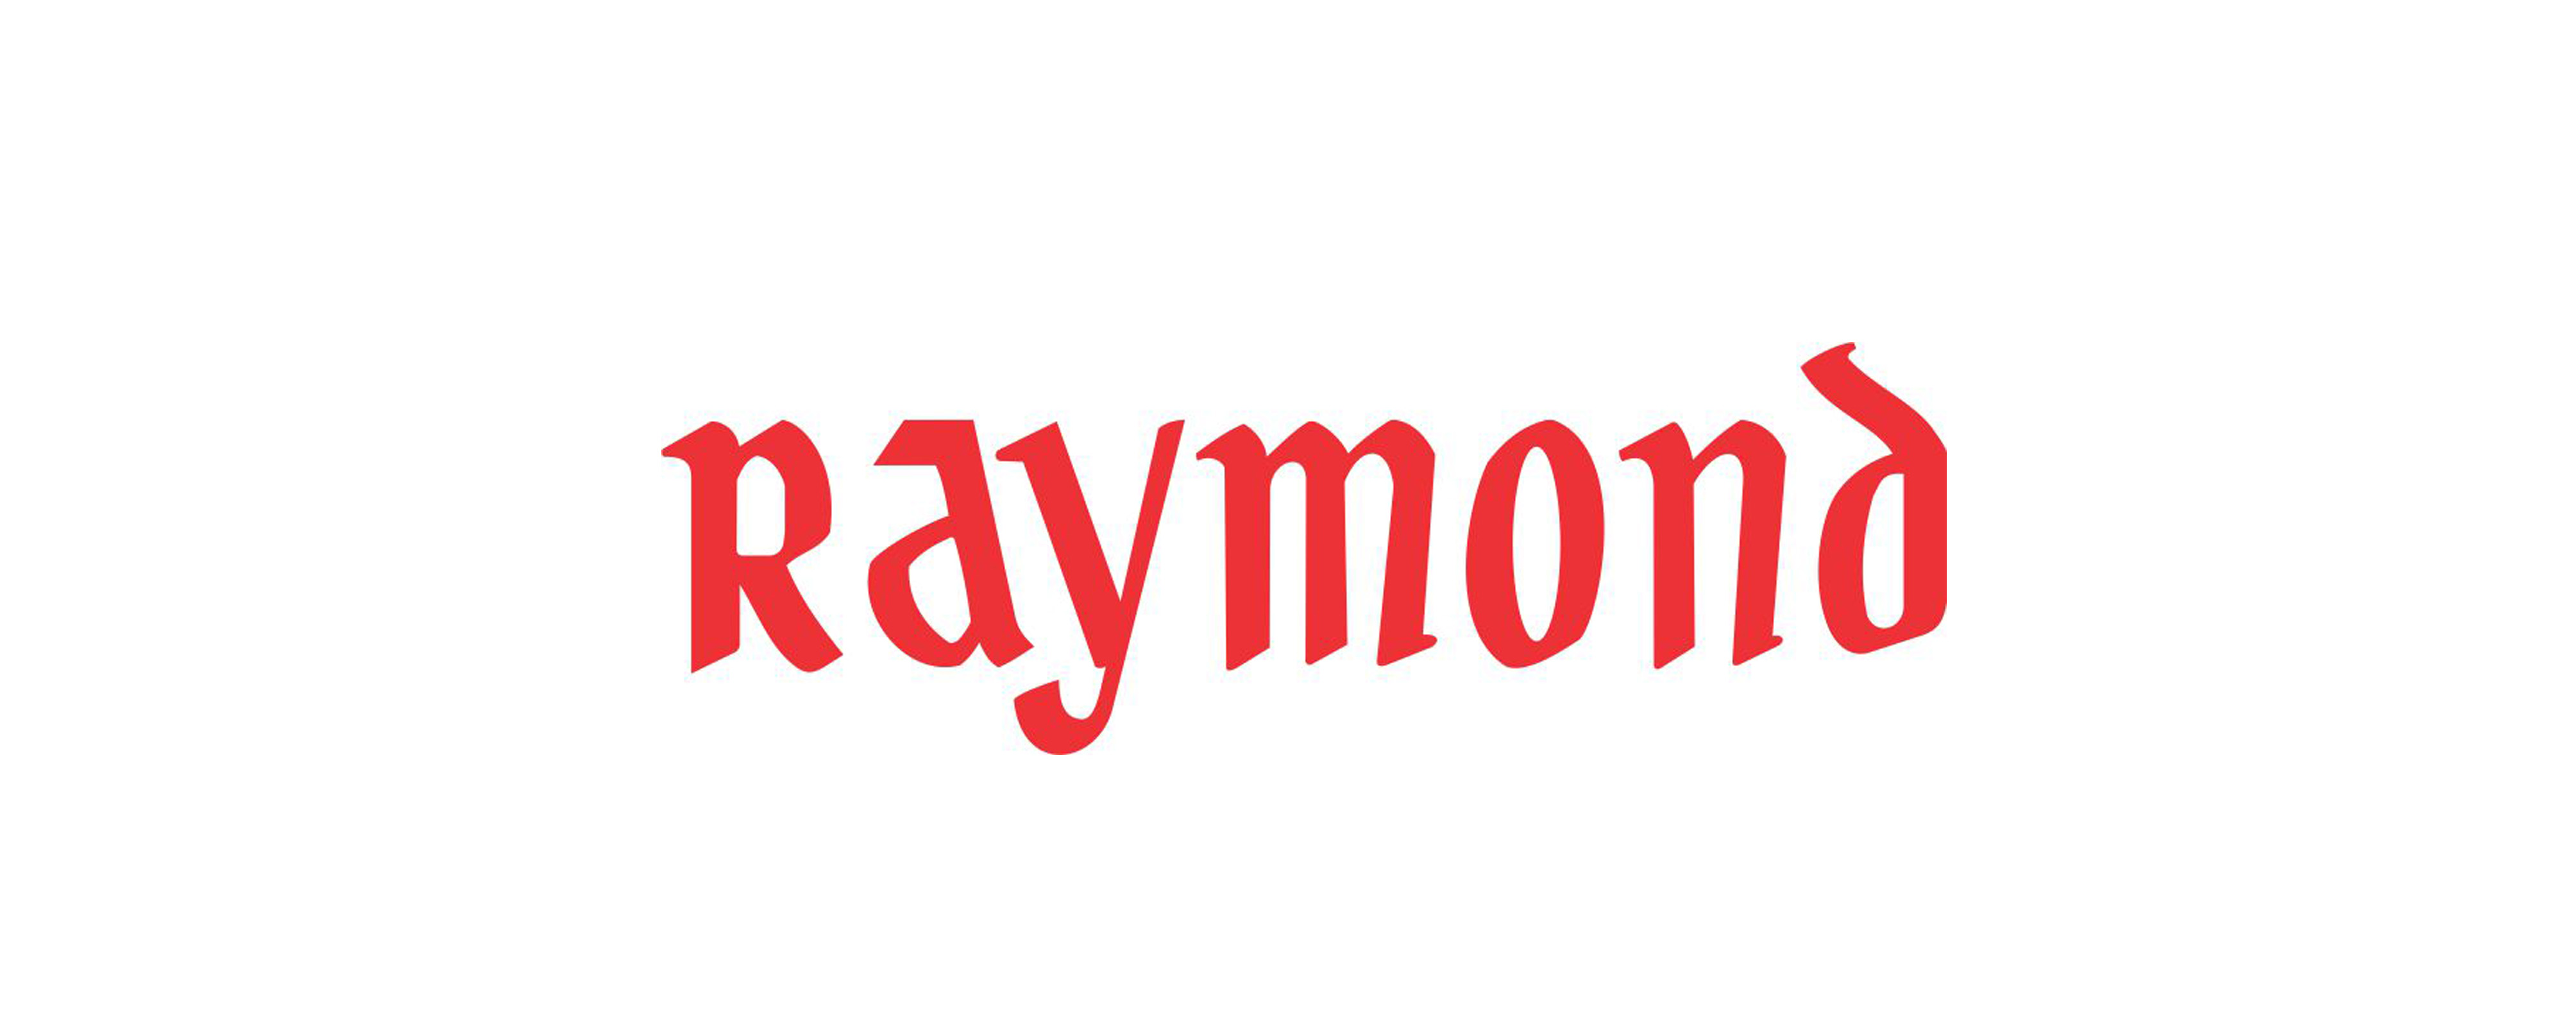 Raymond Brand Logo